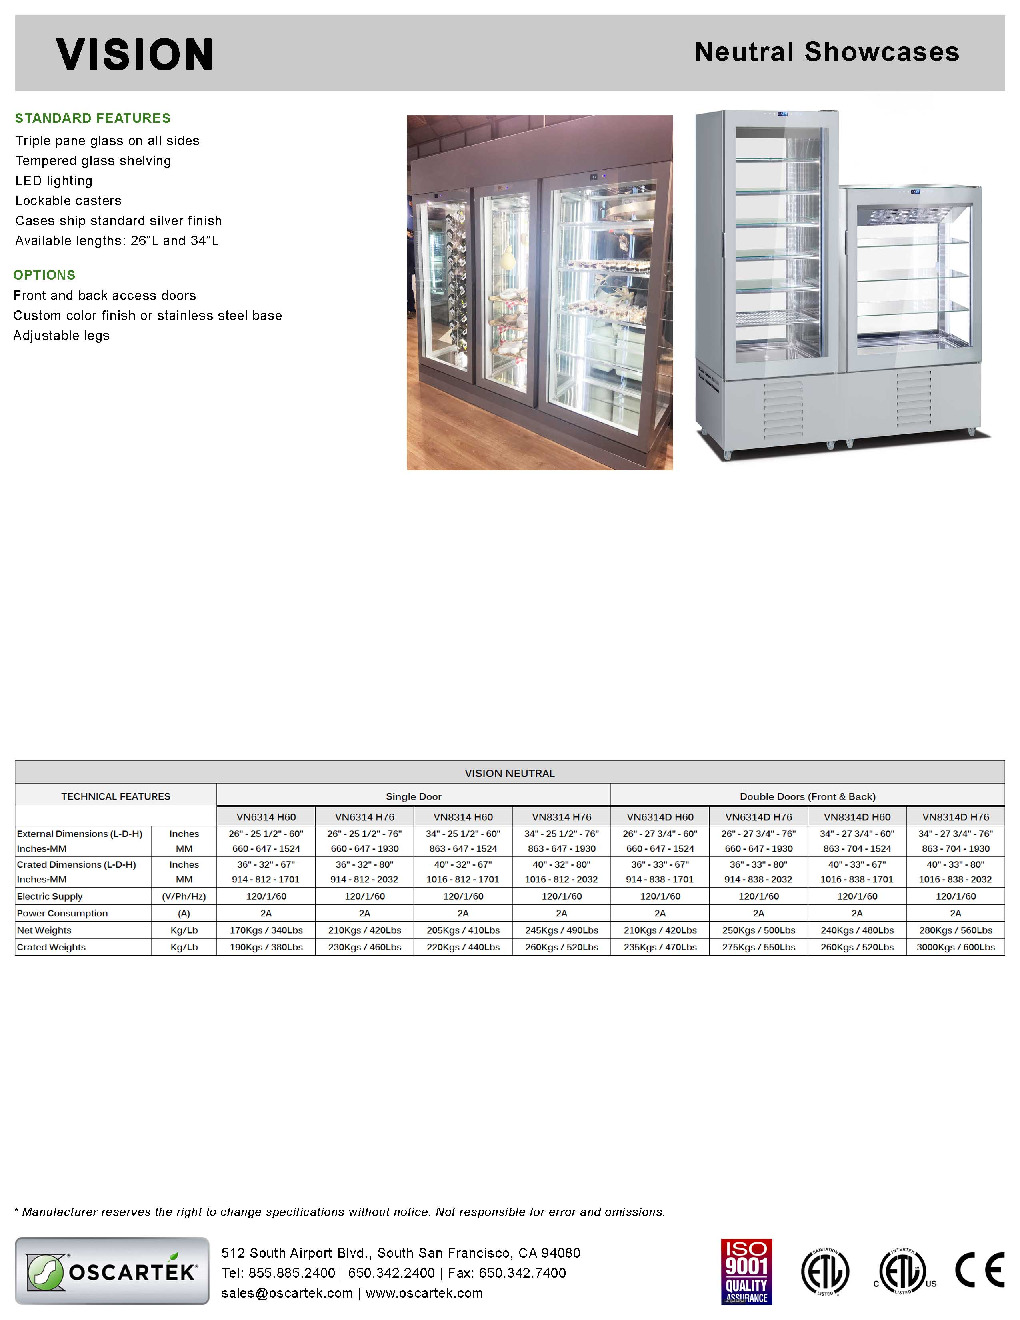 Oscartek VISION VN6314 H76 Non-Refrigerated Bakery Display Case